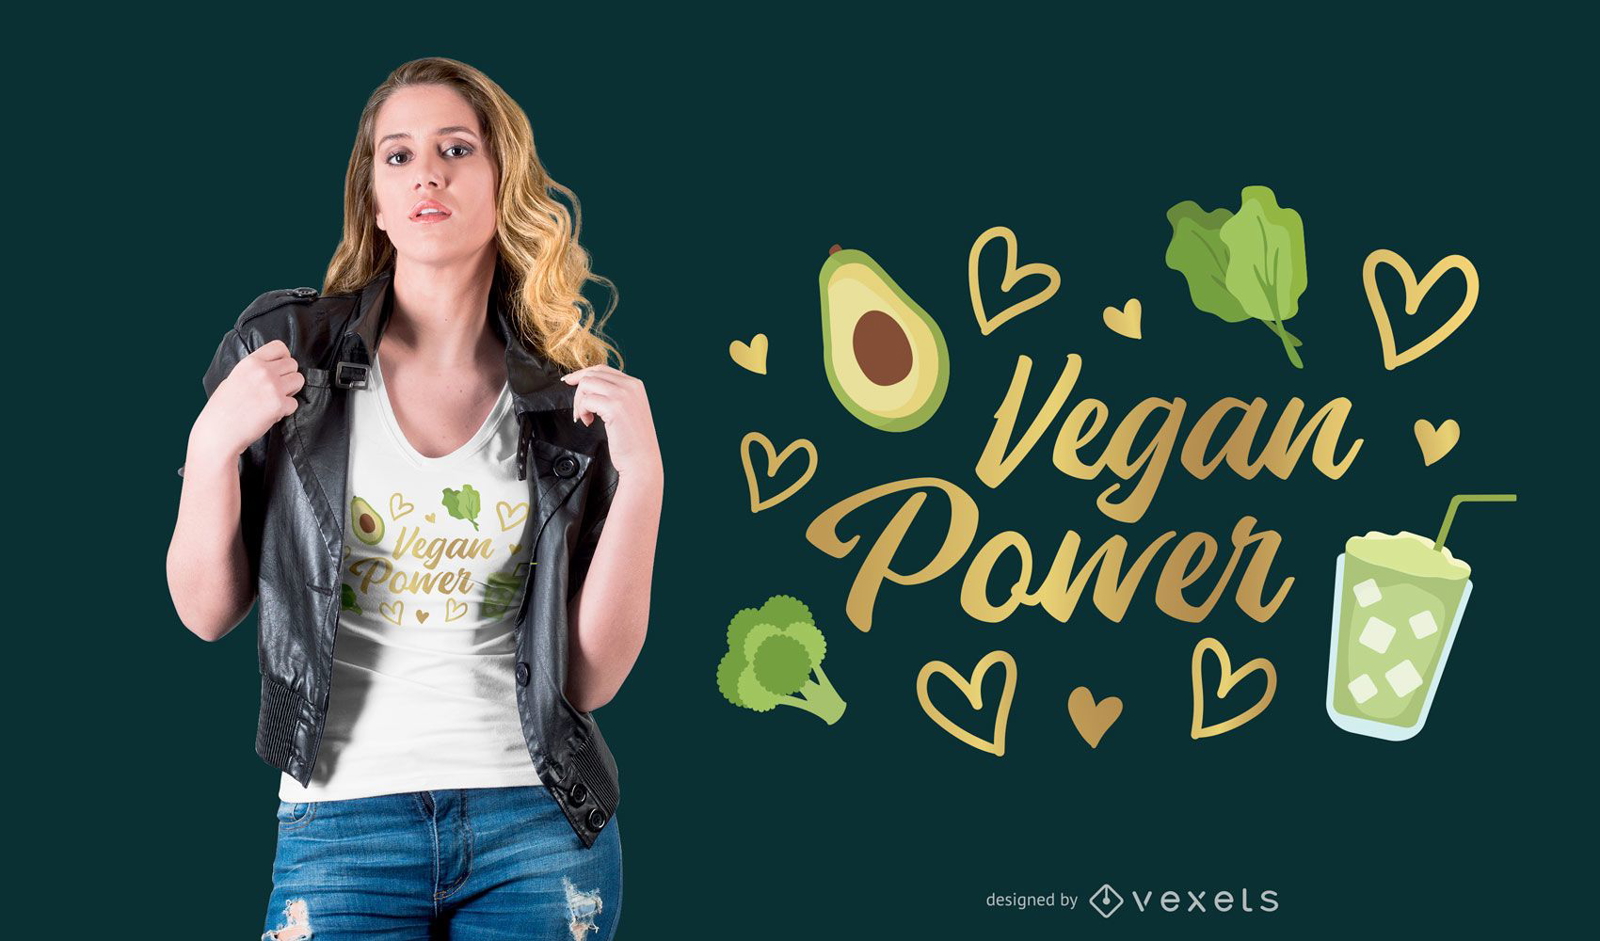 Vegan power green foods t-shirt design